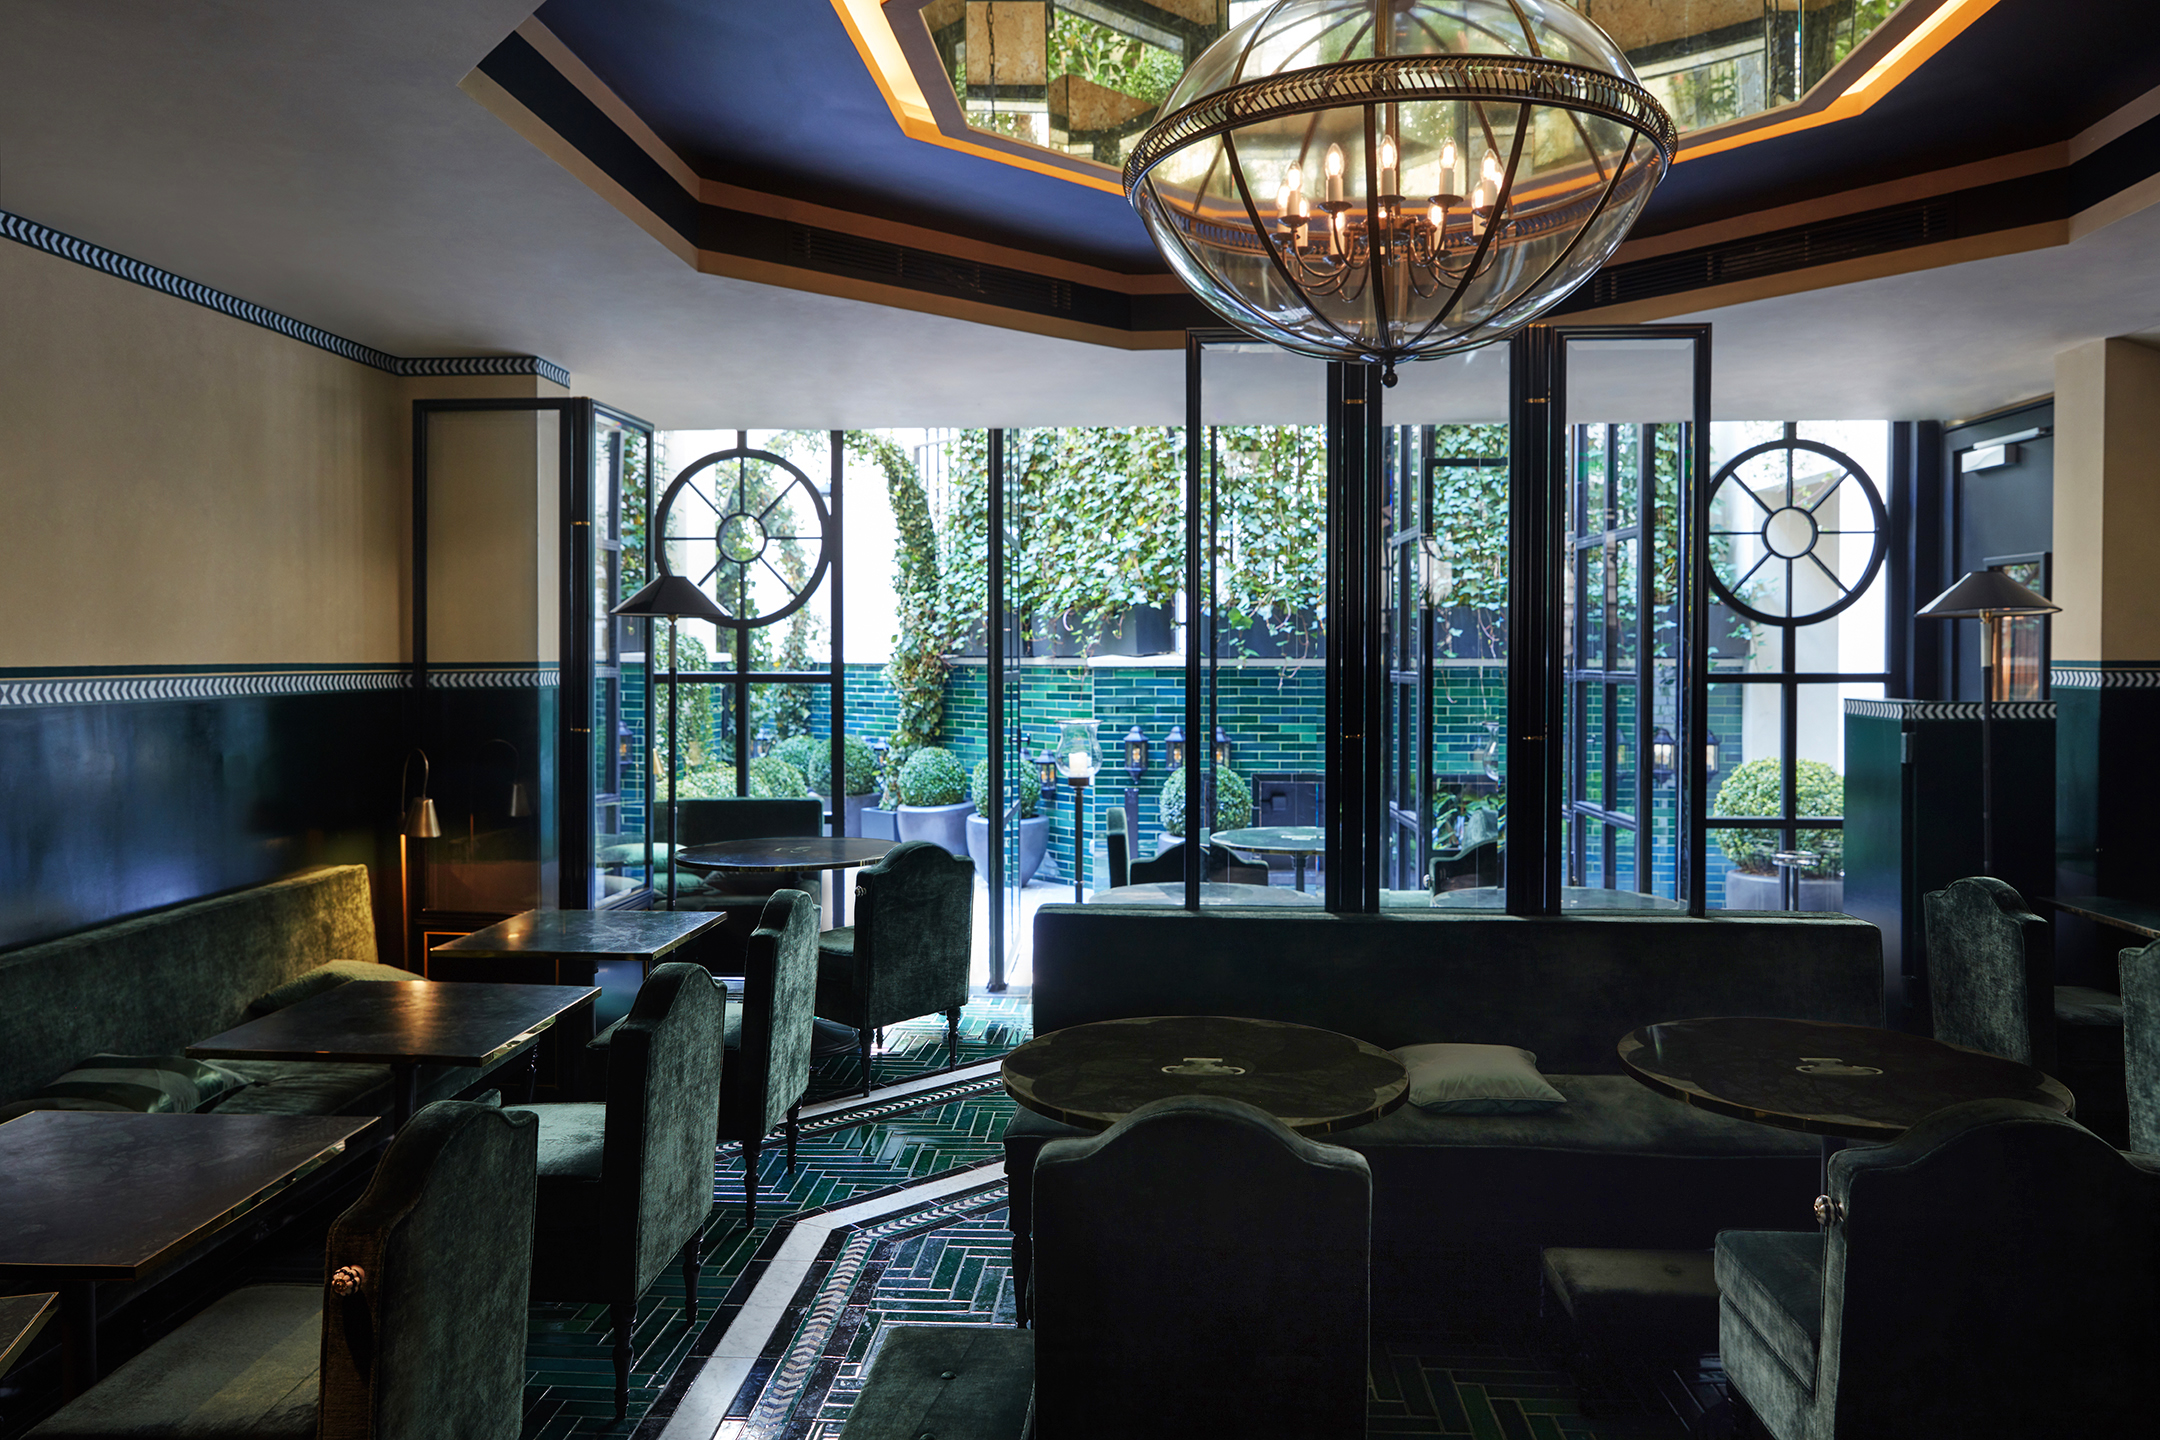 Emerald-green velvet seating with brass bag holders and Moroccan floor tiles at Galanga Restaurant, Monsieur George Hotel, Paris, interior designed by Anouska Hempel - Effect Magazine